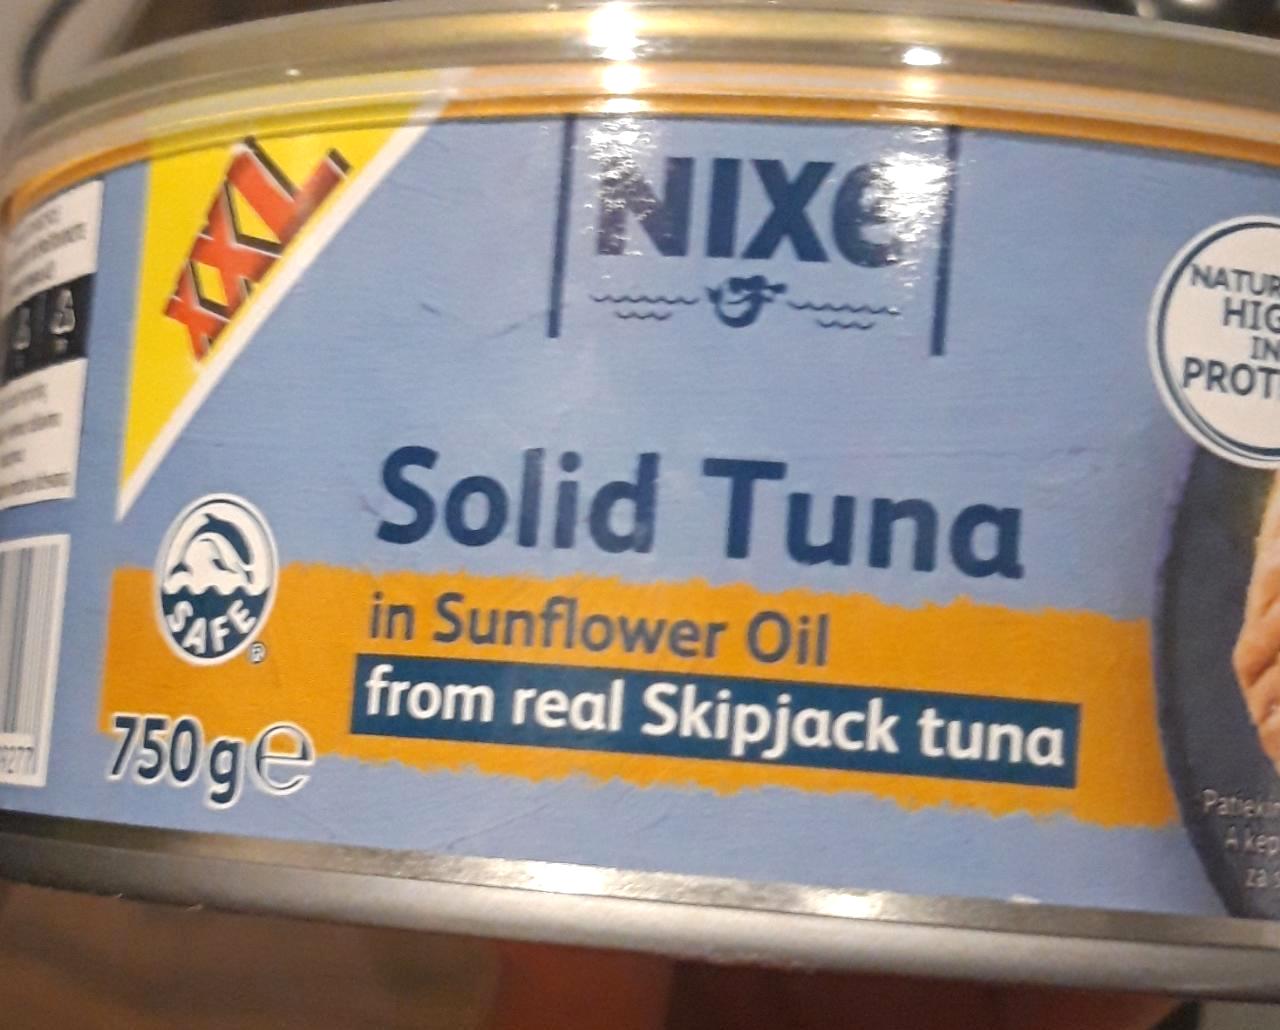 Képek - Solid tuna in sunflower oil Nixe